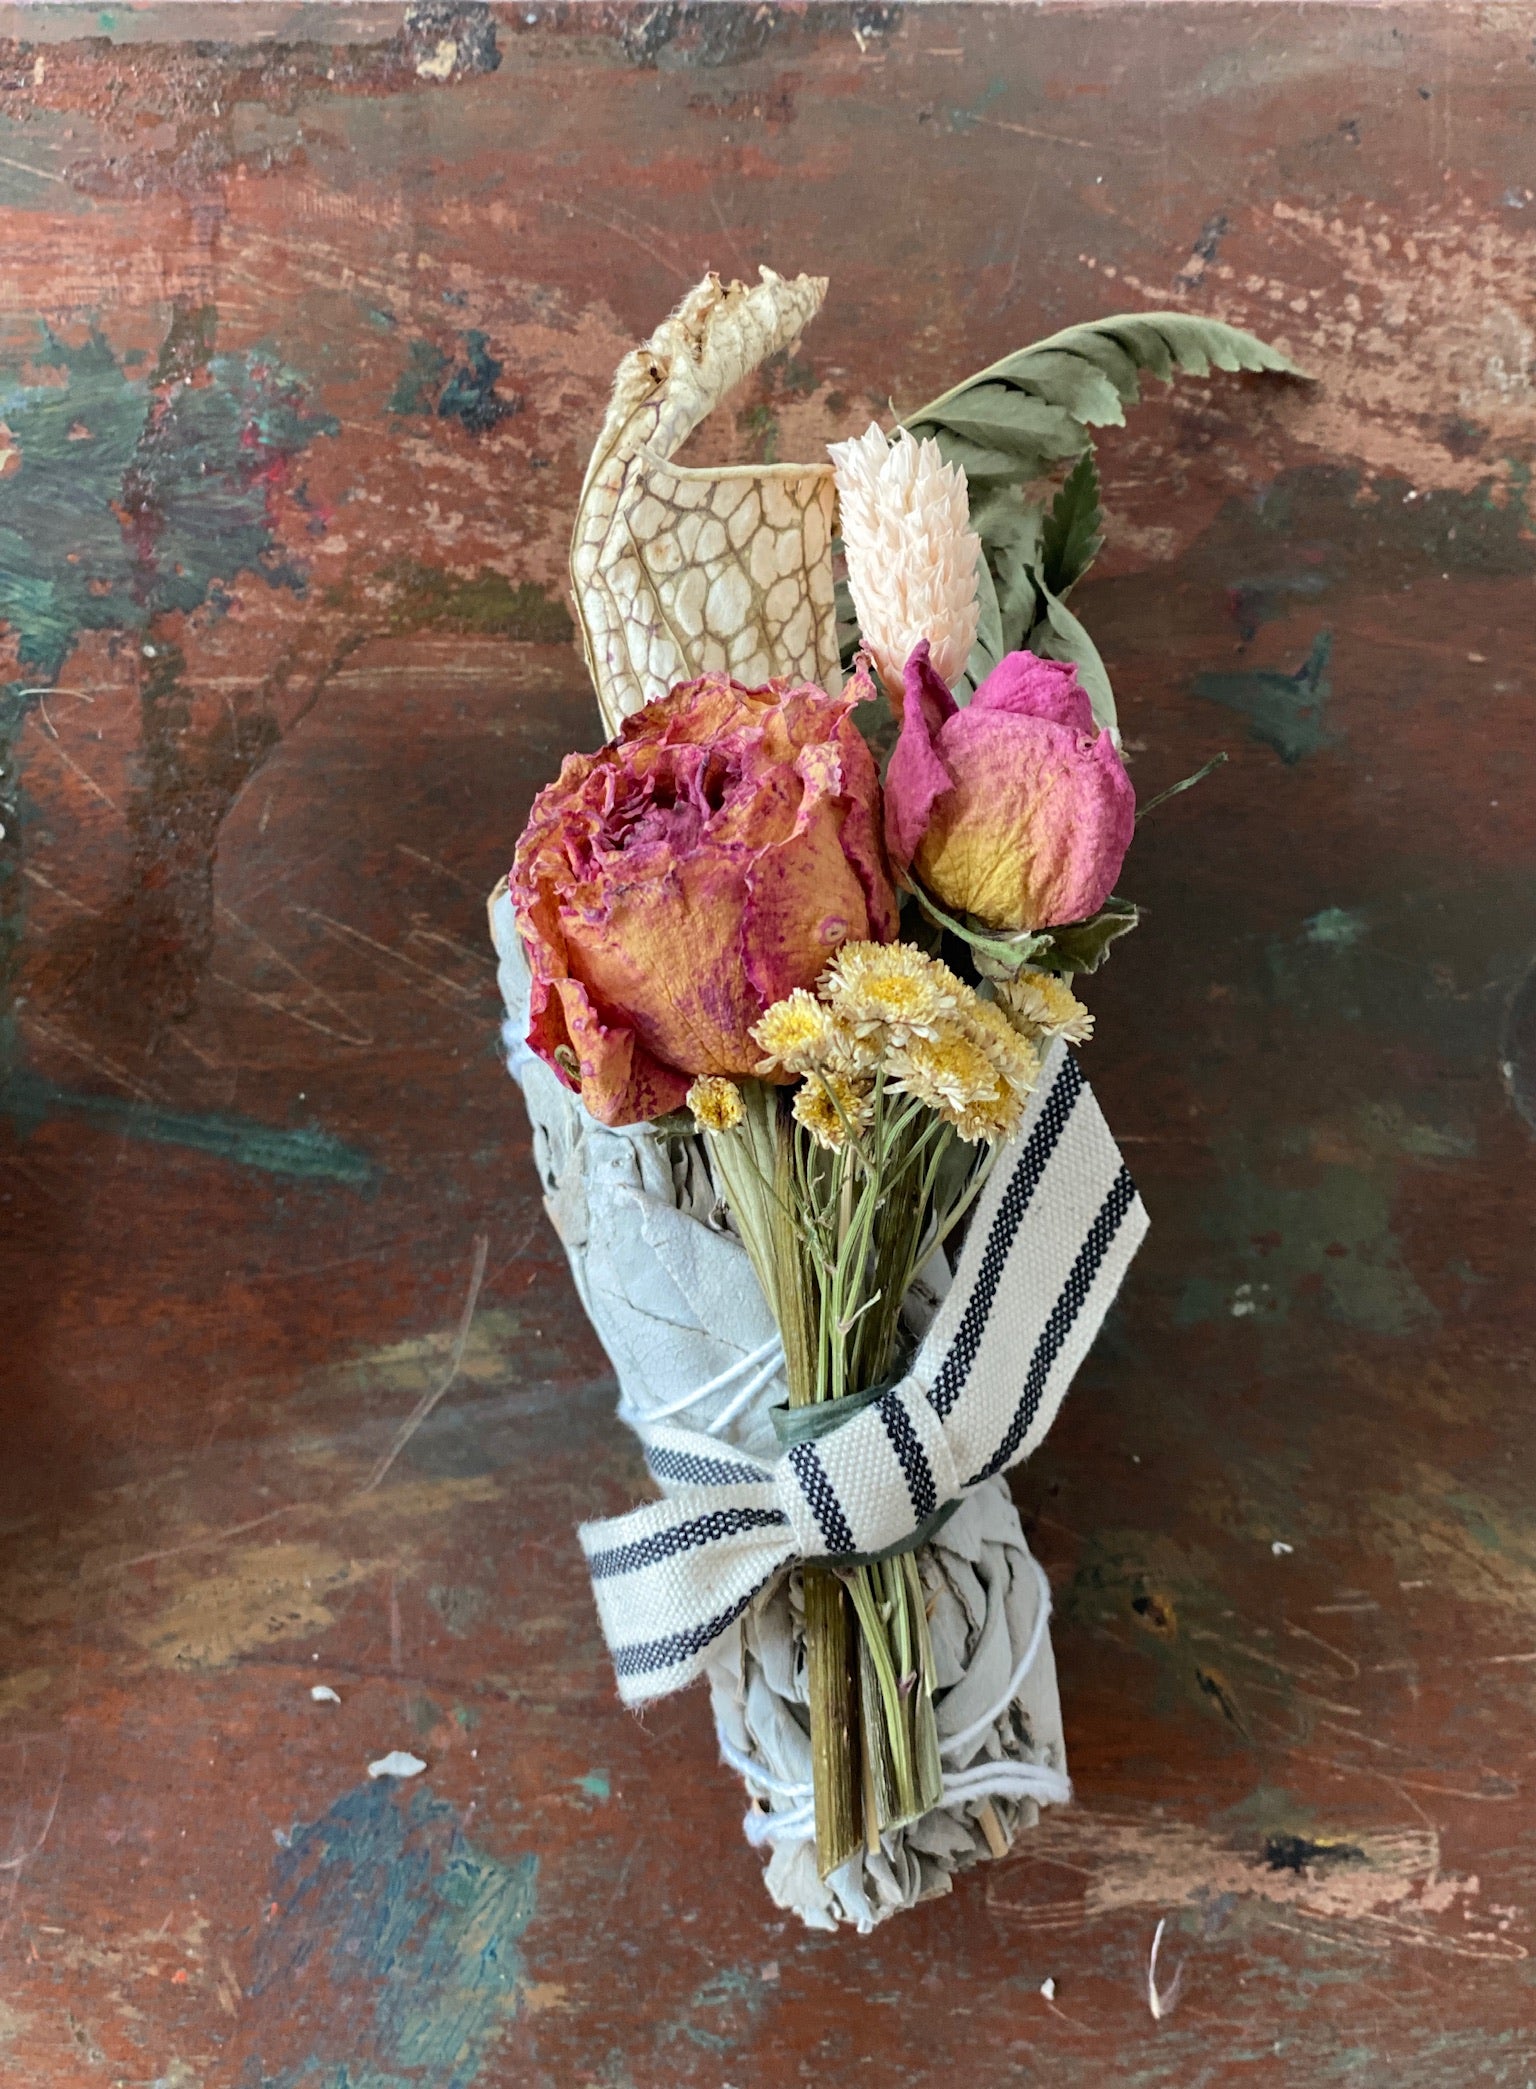 Mini Dried Flower Bouquet / Mini Bouquet / Small Dried Floral Arrangement /  Dried Flower Bunch -/Dried Flowers -/Gift Add on